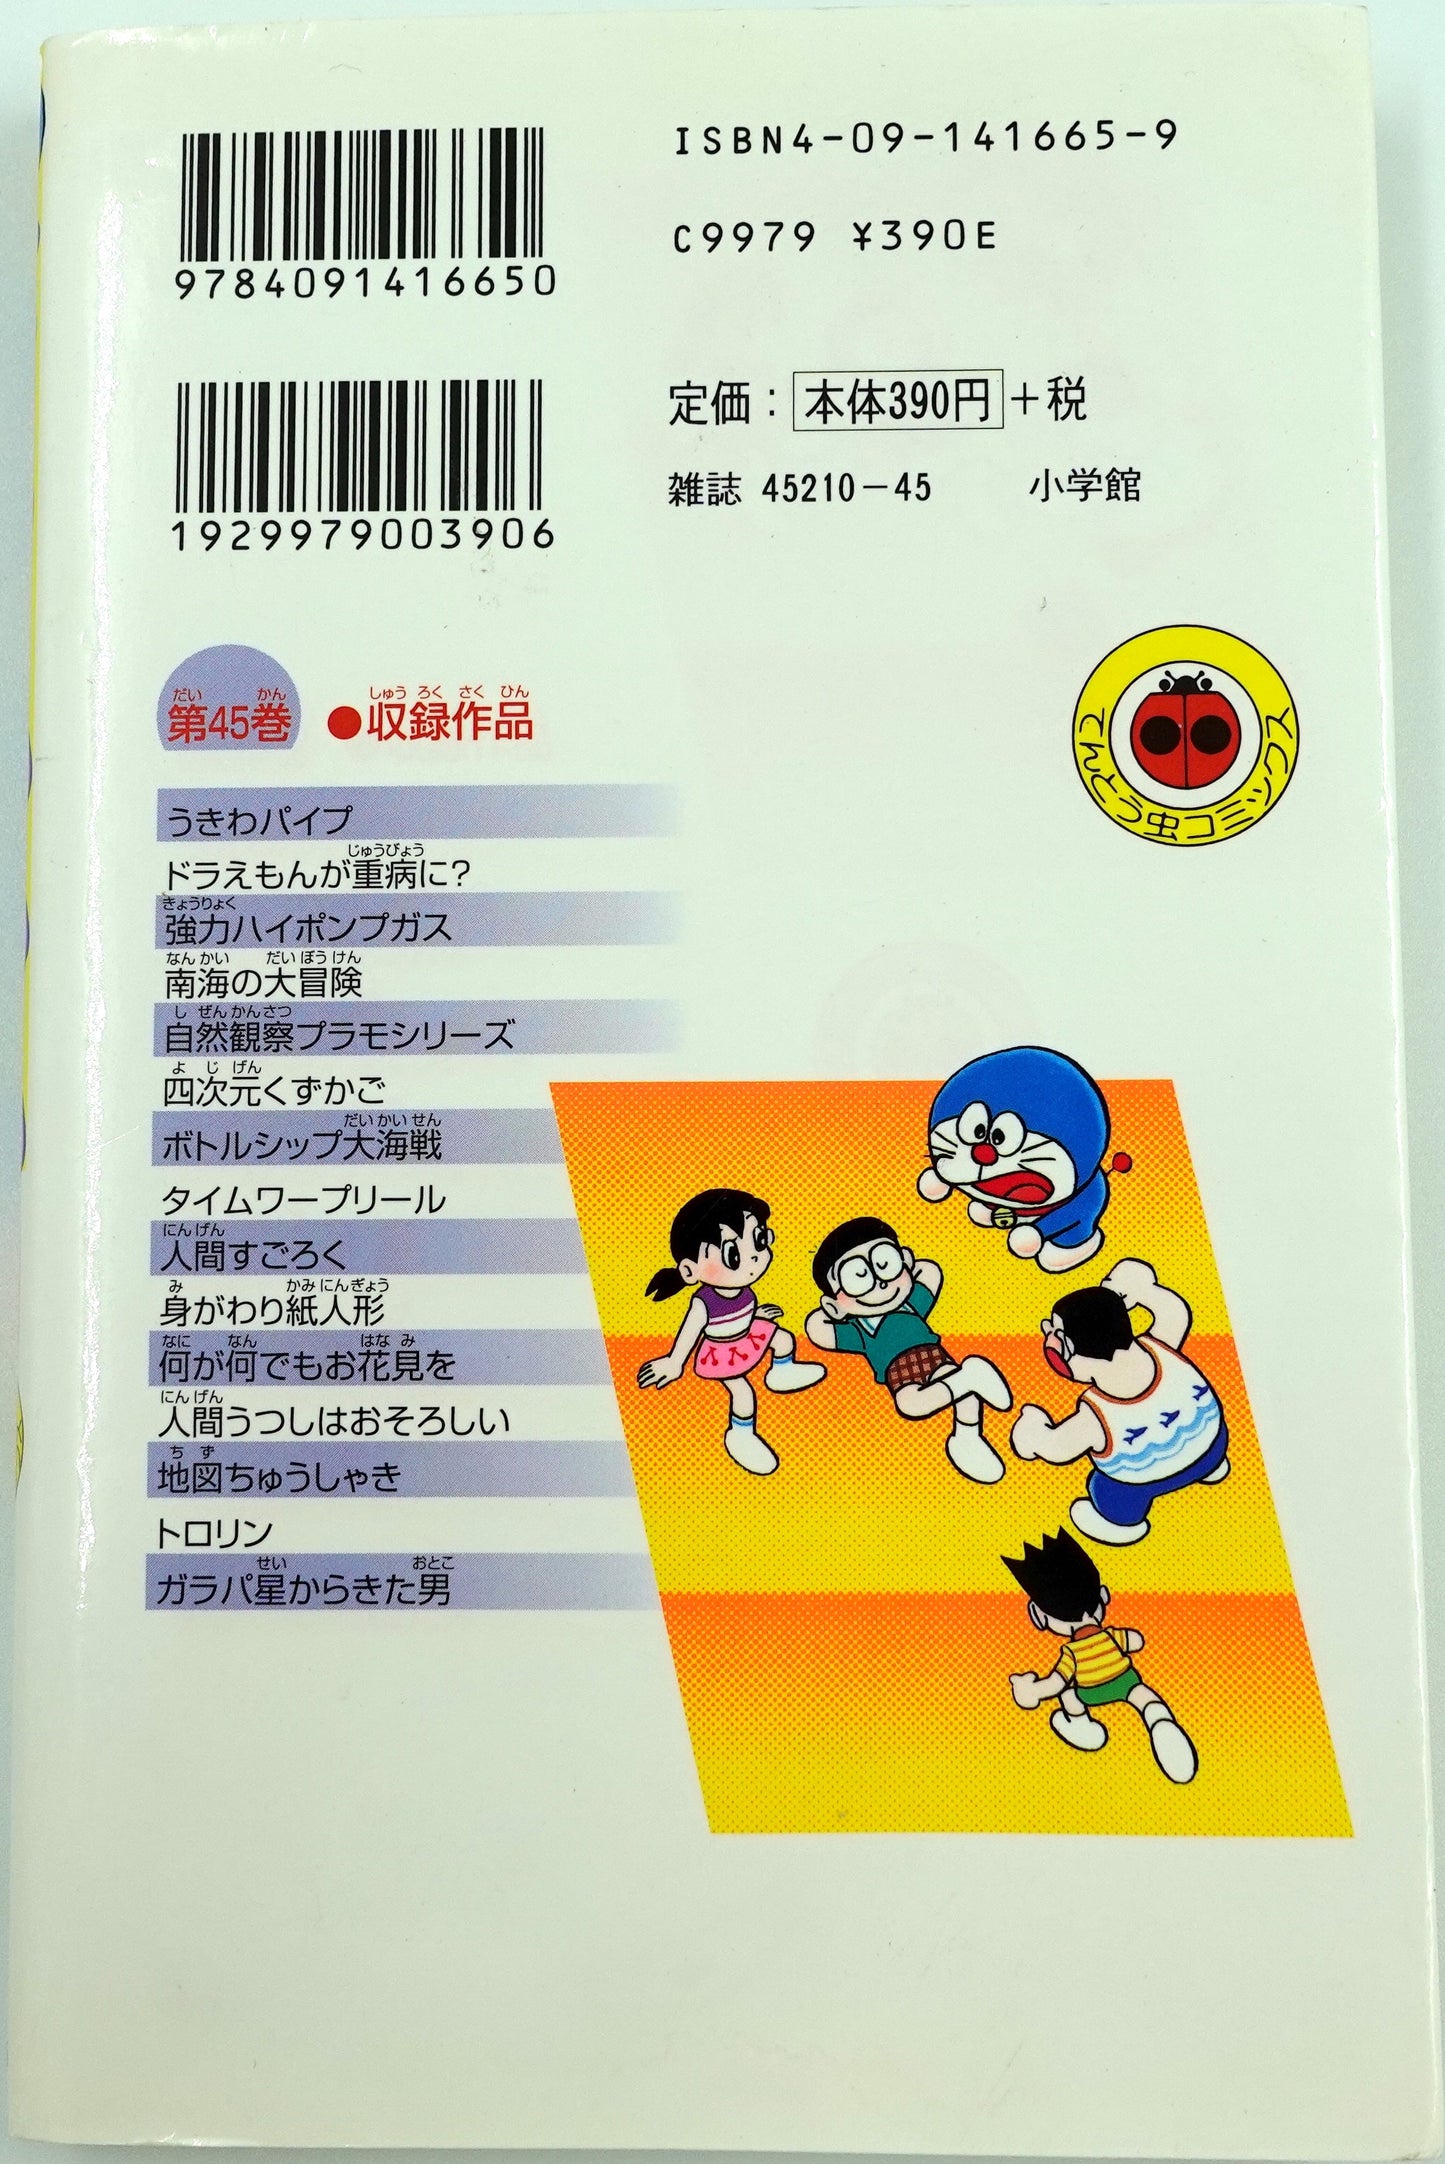 Doraemon Vol.45- Official Japanese Edition